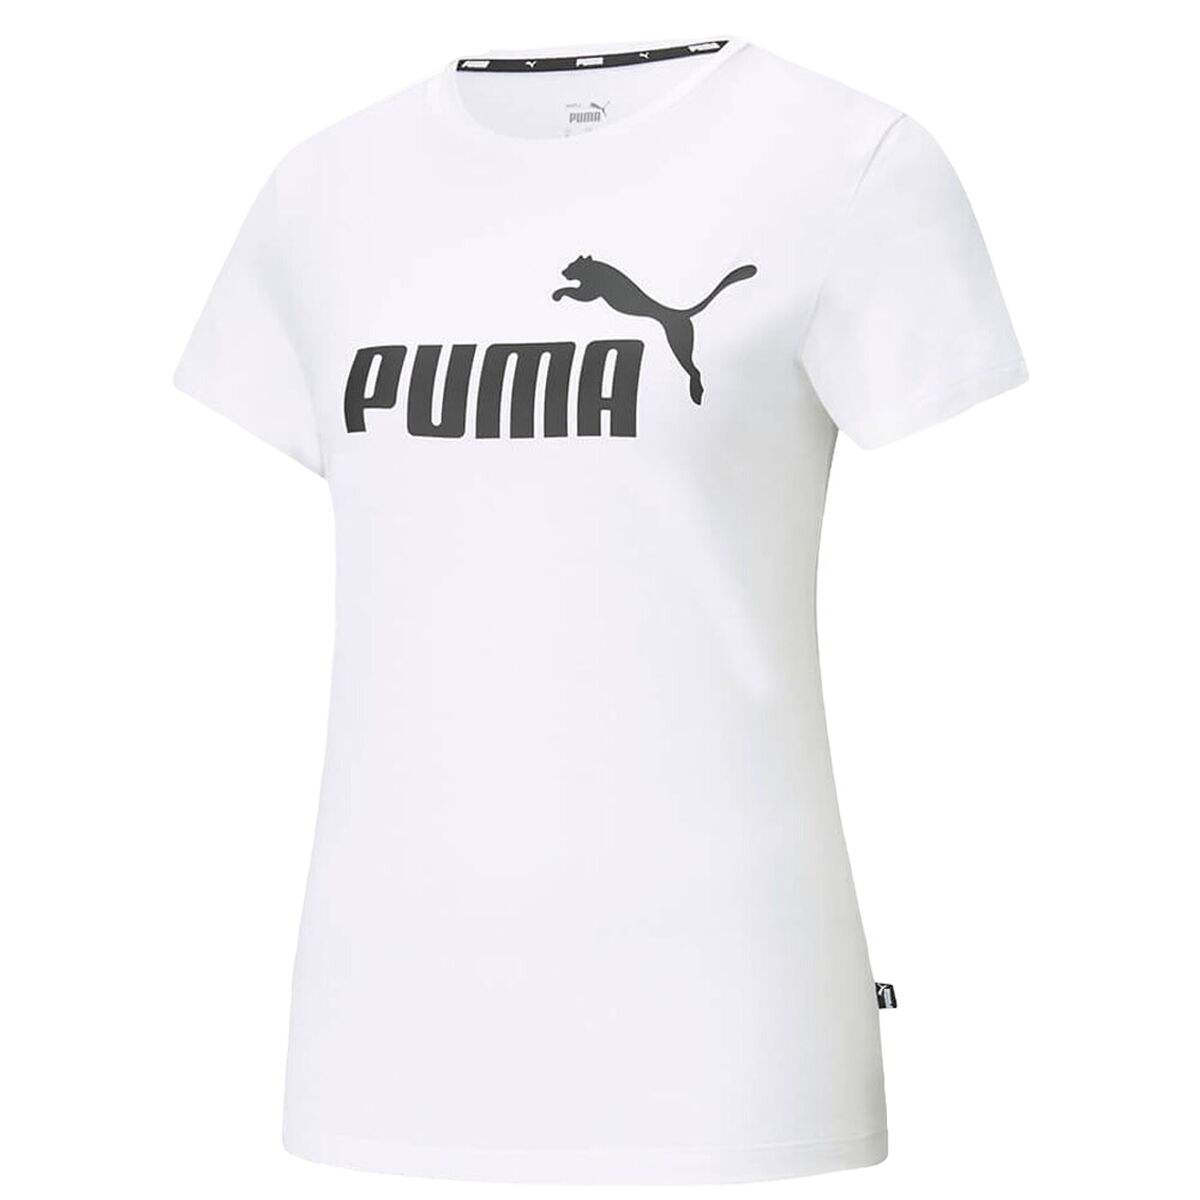 T-shirt à manches courtes femme Puma LOGO TEE 586774 02 Blanc - Puma - Jardin D'Eyden - jardindeyden.fr